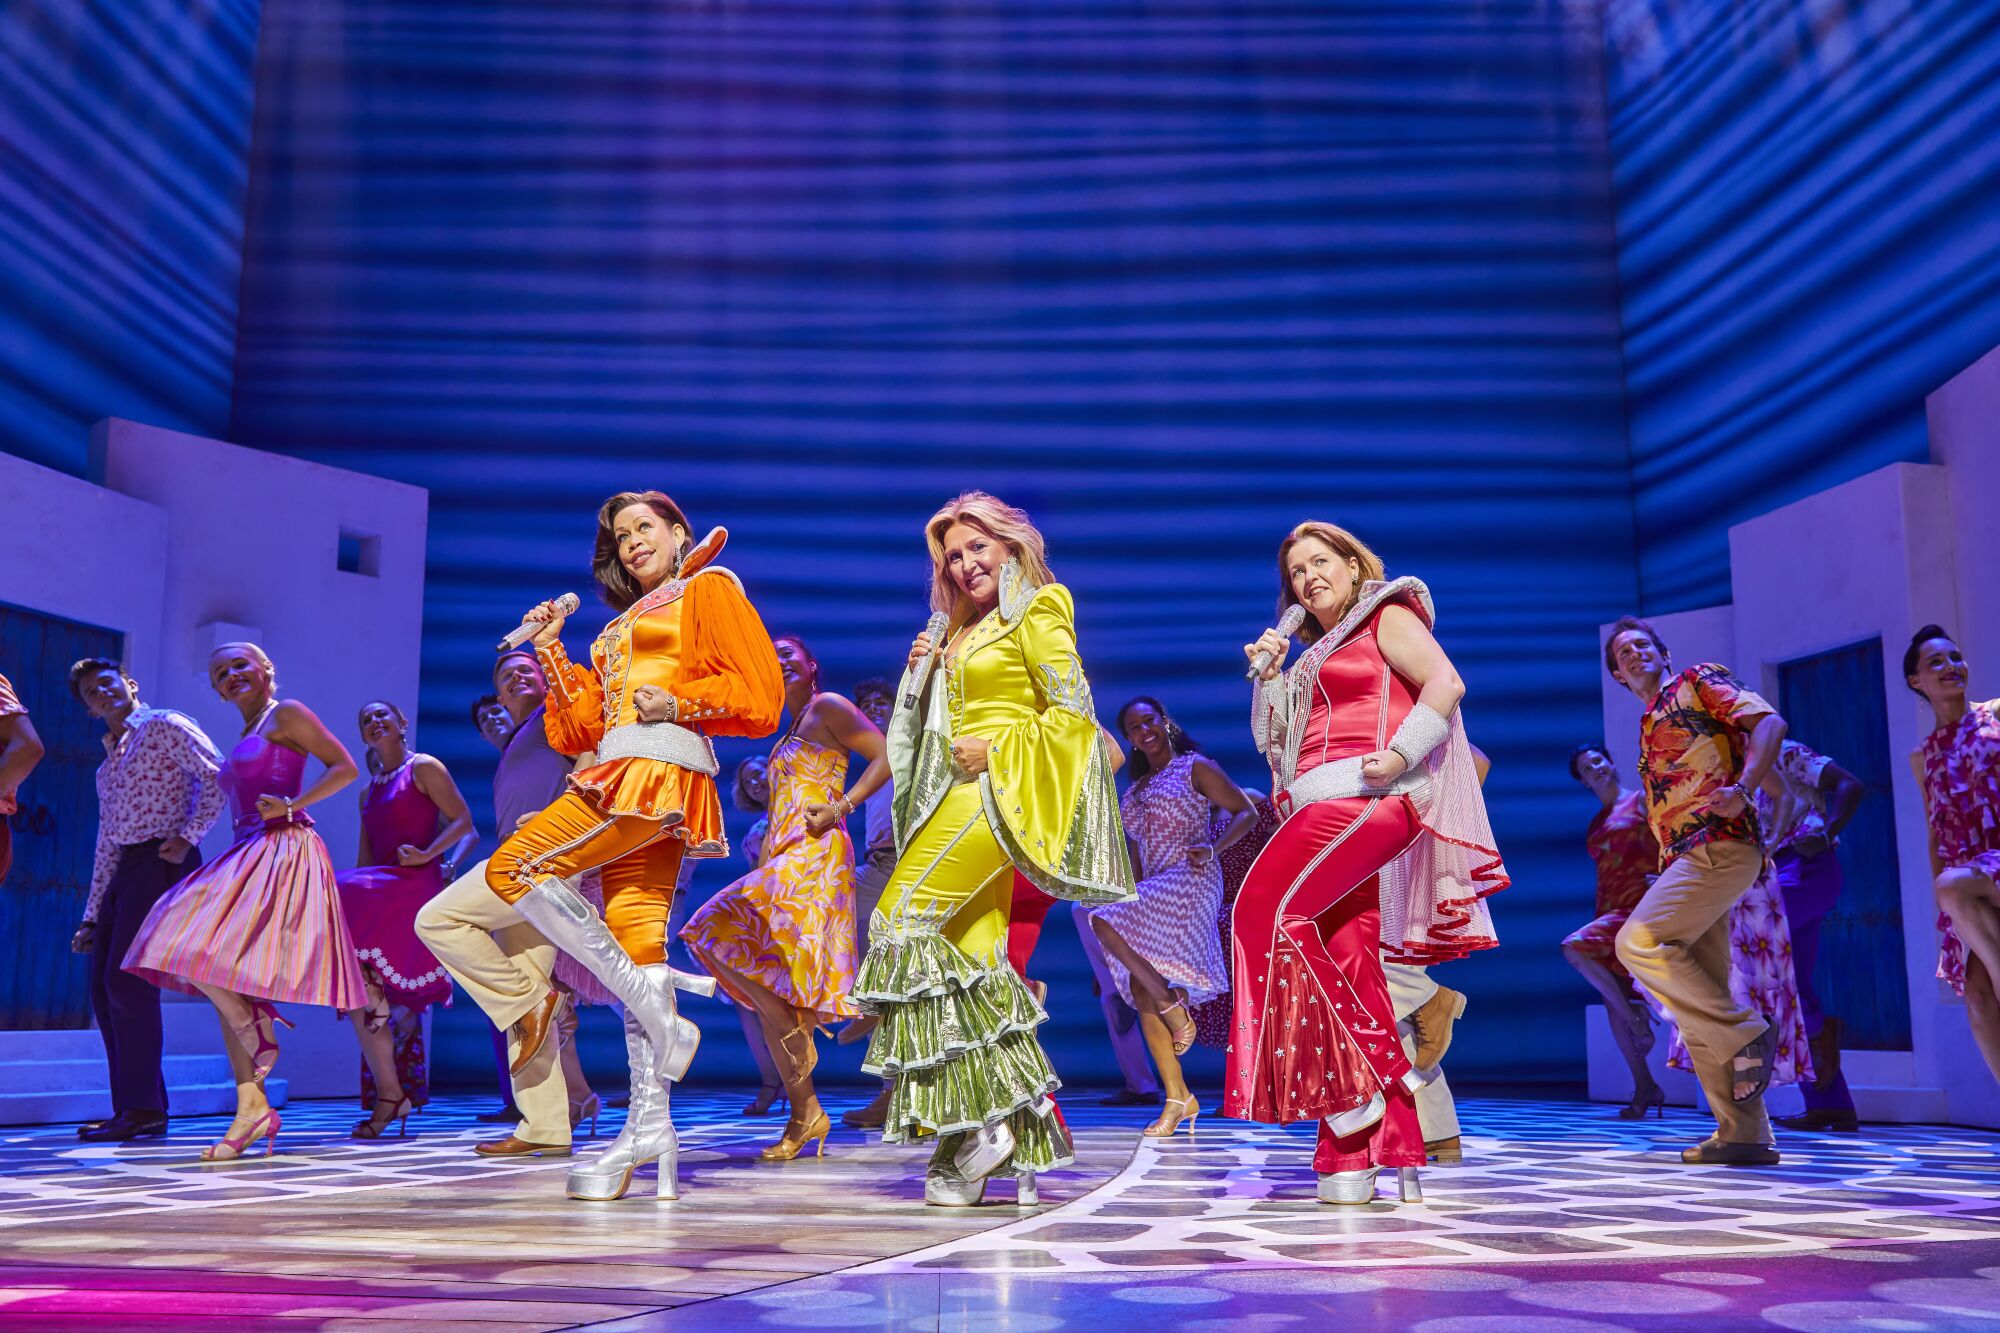 The ABBA jukebox musical "Mamma Mia!" returns to the San Diego Civic Theatre Nov. 7-12.